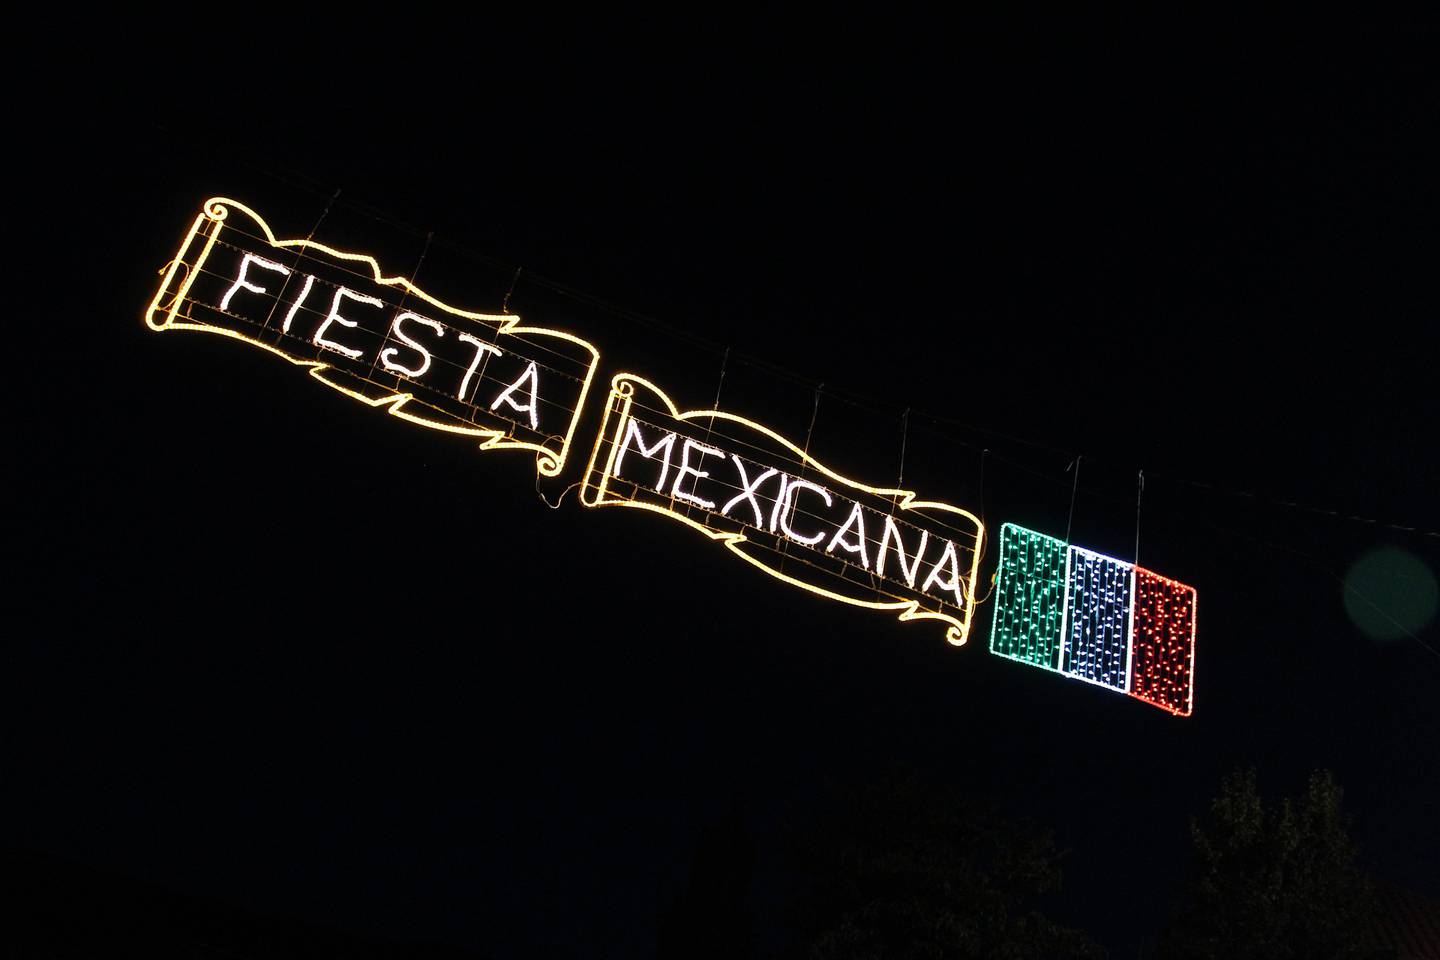 Fiesta mexicana.